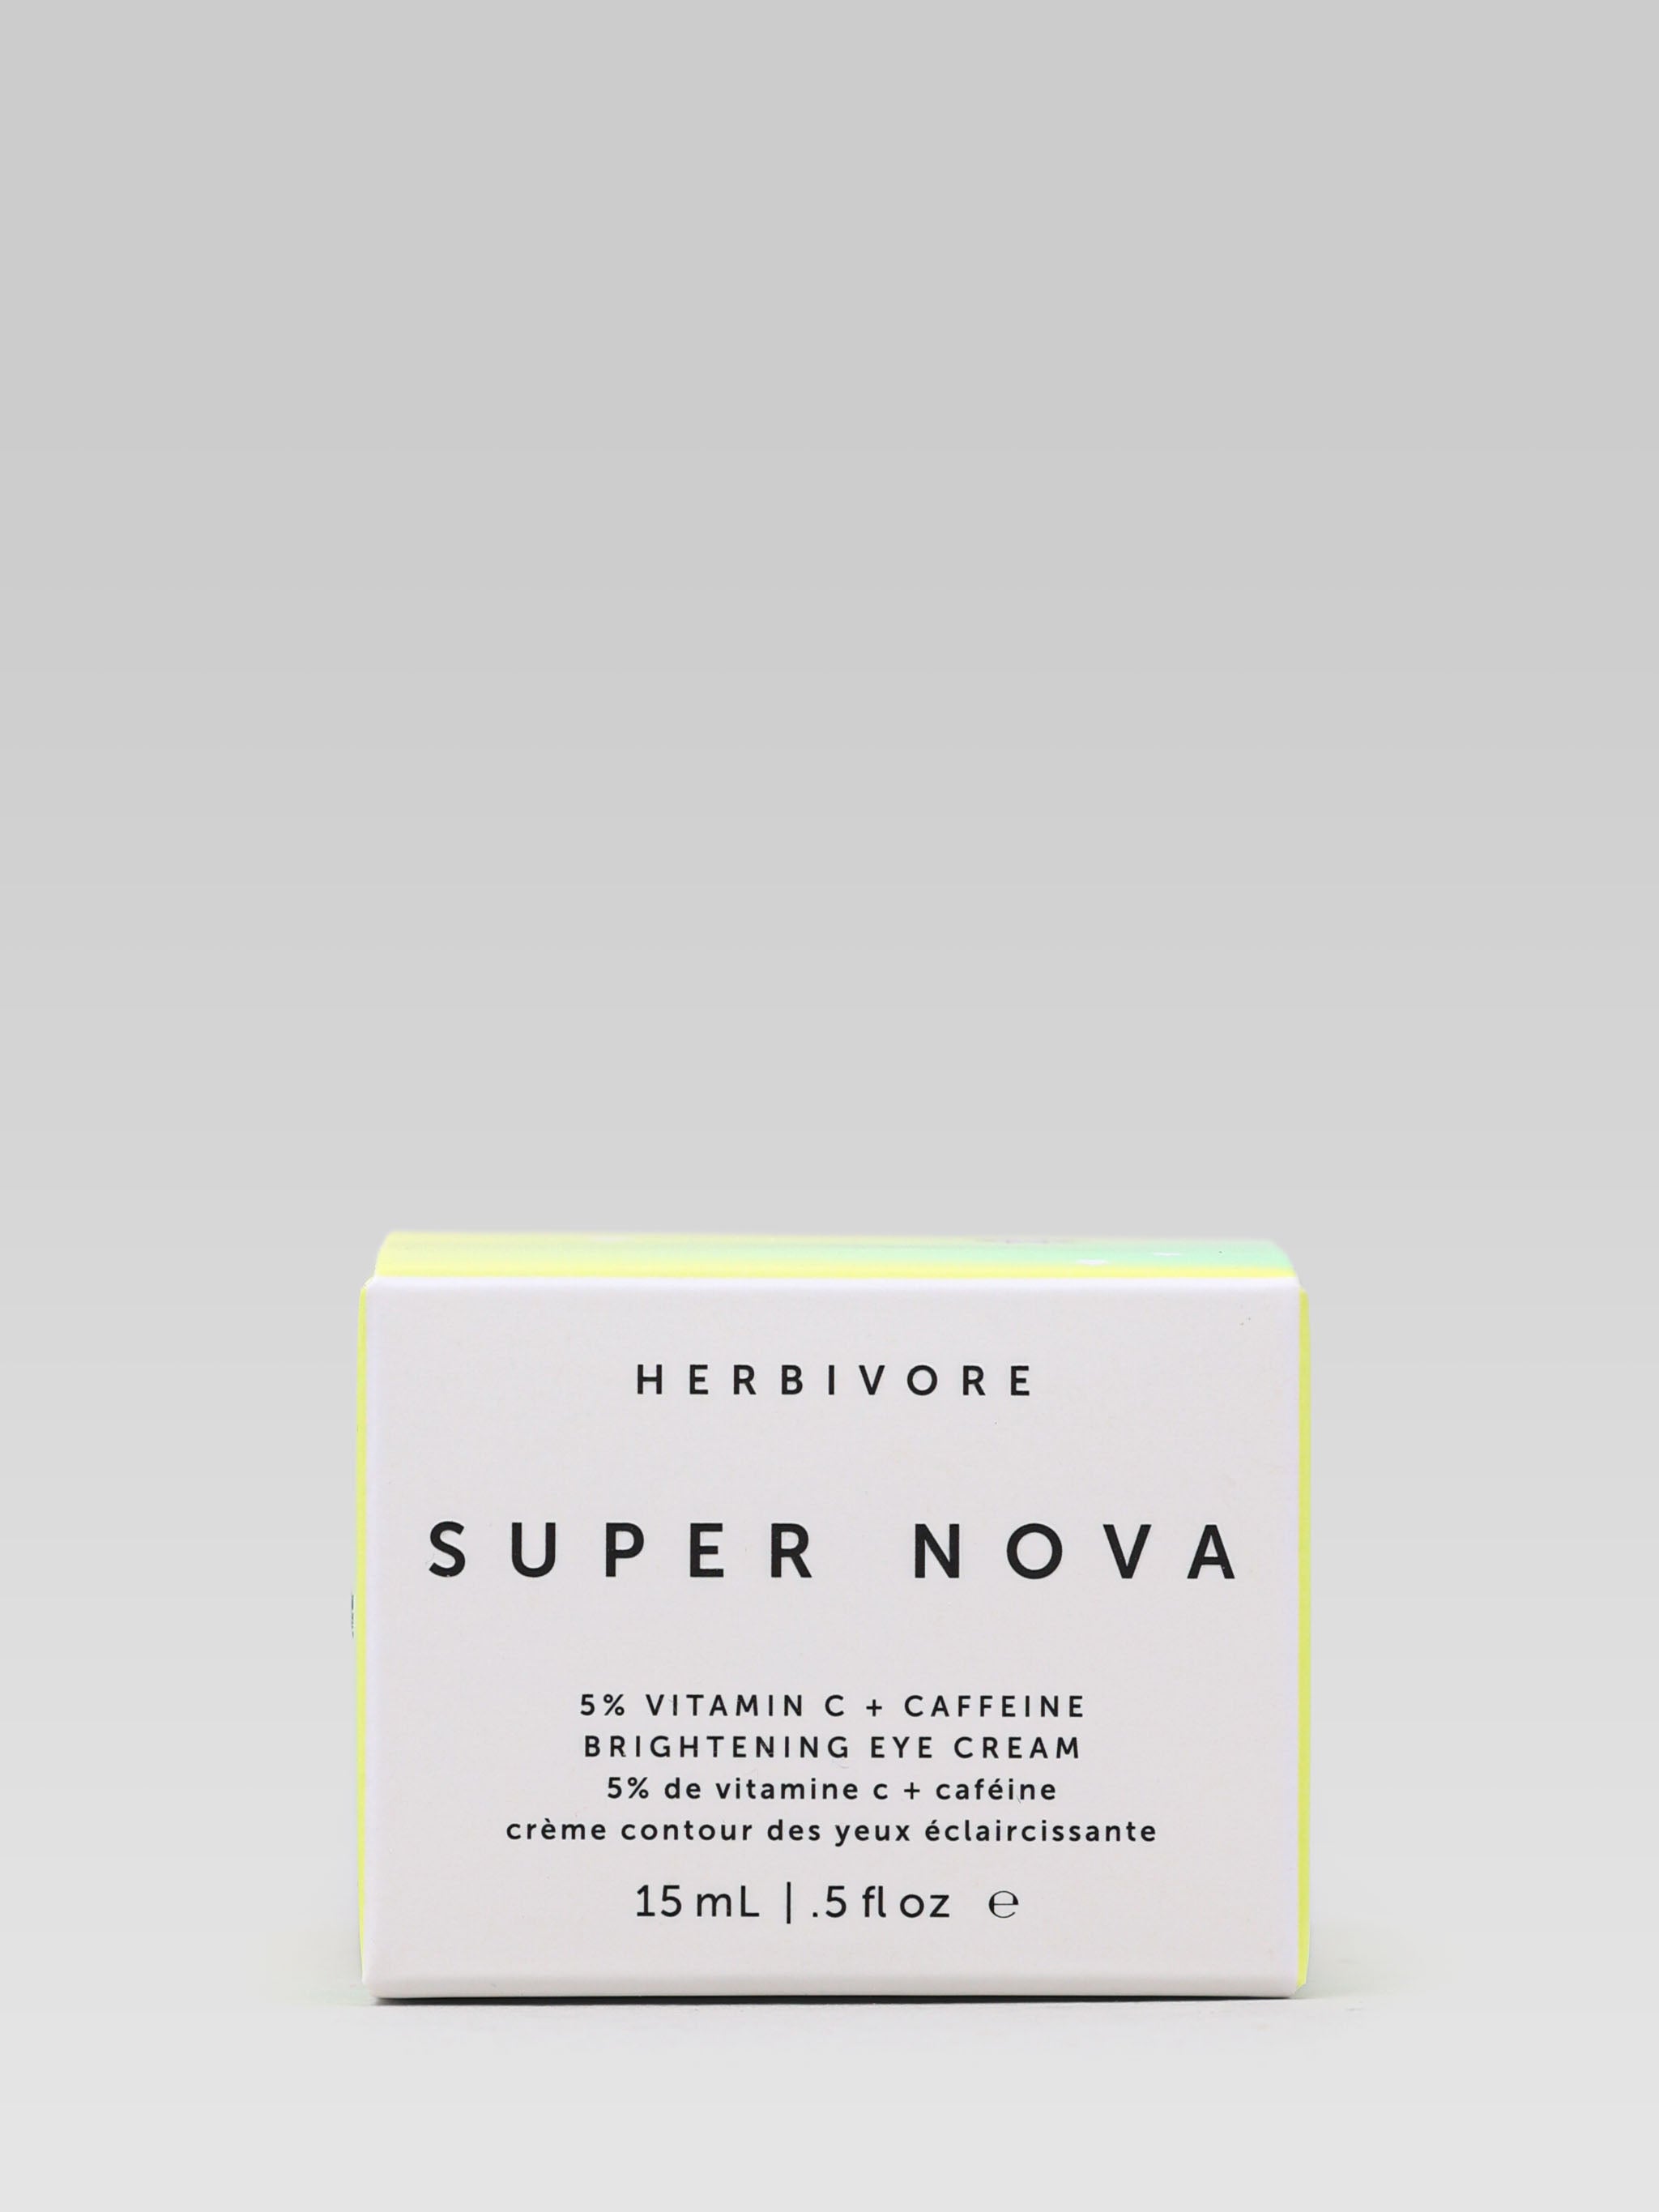 HERBIVORE BOTANICALS Super Nova Brightening Eye Cream Product Packaging 